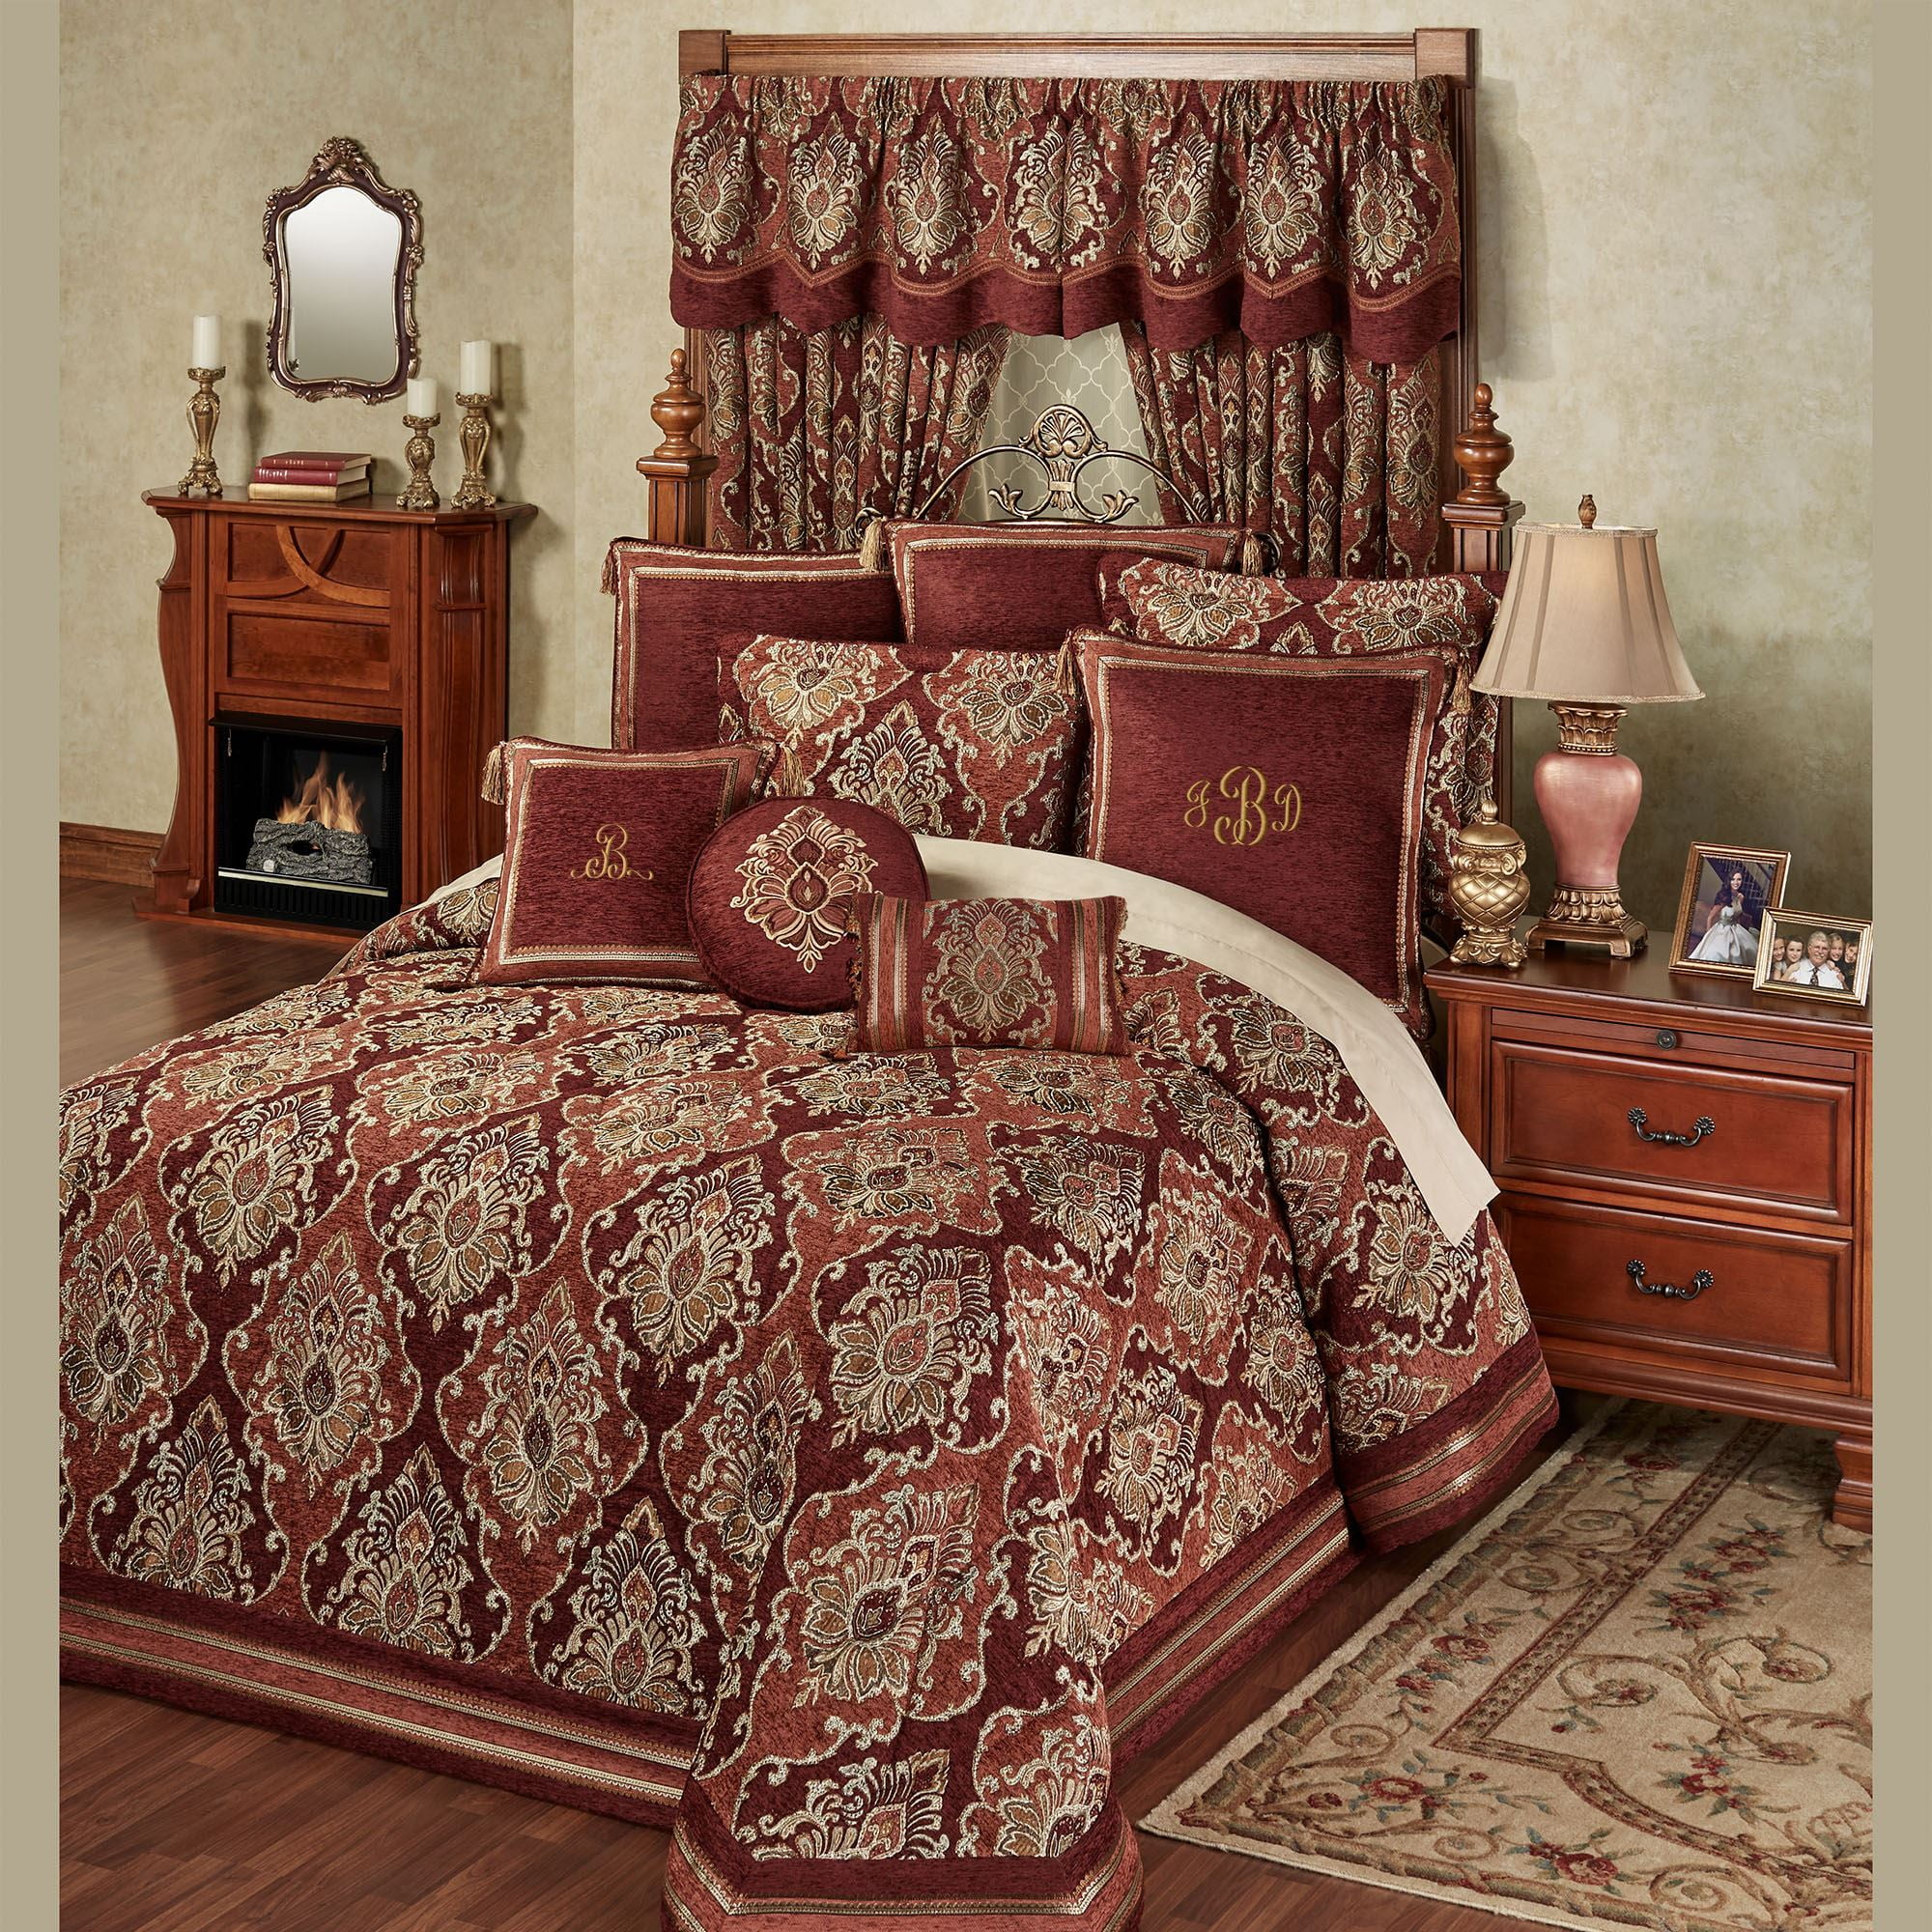 Ravenna Grande Bedspread - Jacquard Chenille Quilted - Victorian Style  Decor - Burgundy Color - Elegant Bedding for Royal Aesthetic Bedspread  Grande Queen